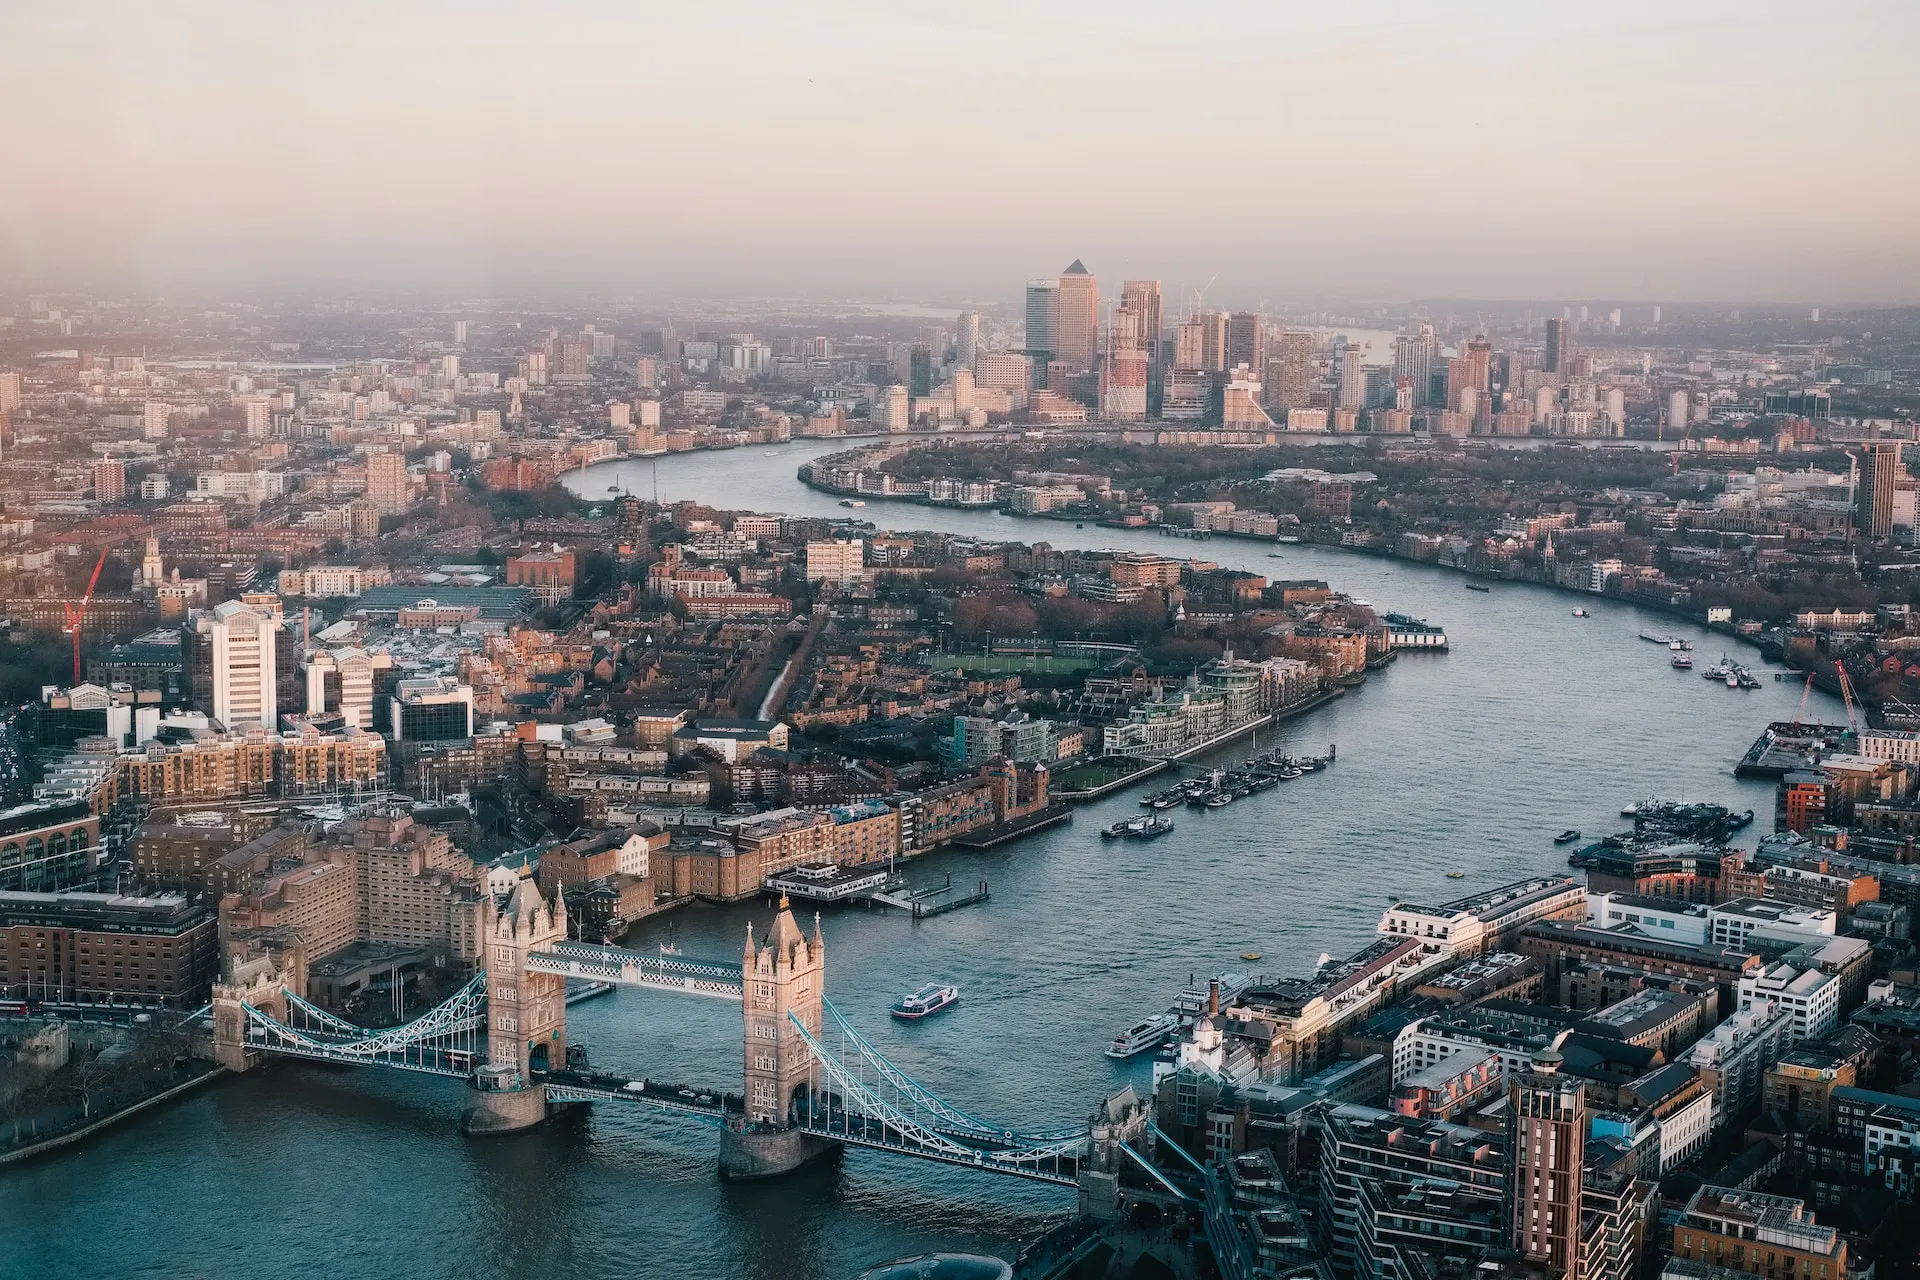 Cityscape of London. Source: Photo by Benjamin Davies on Unsplash